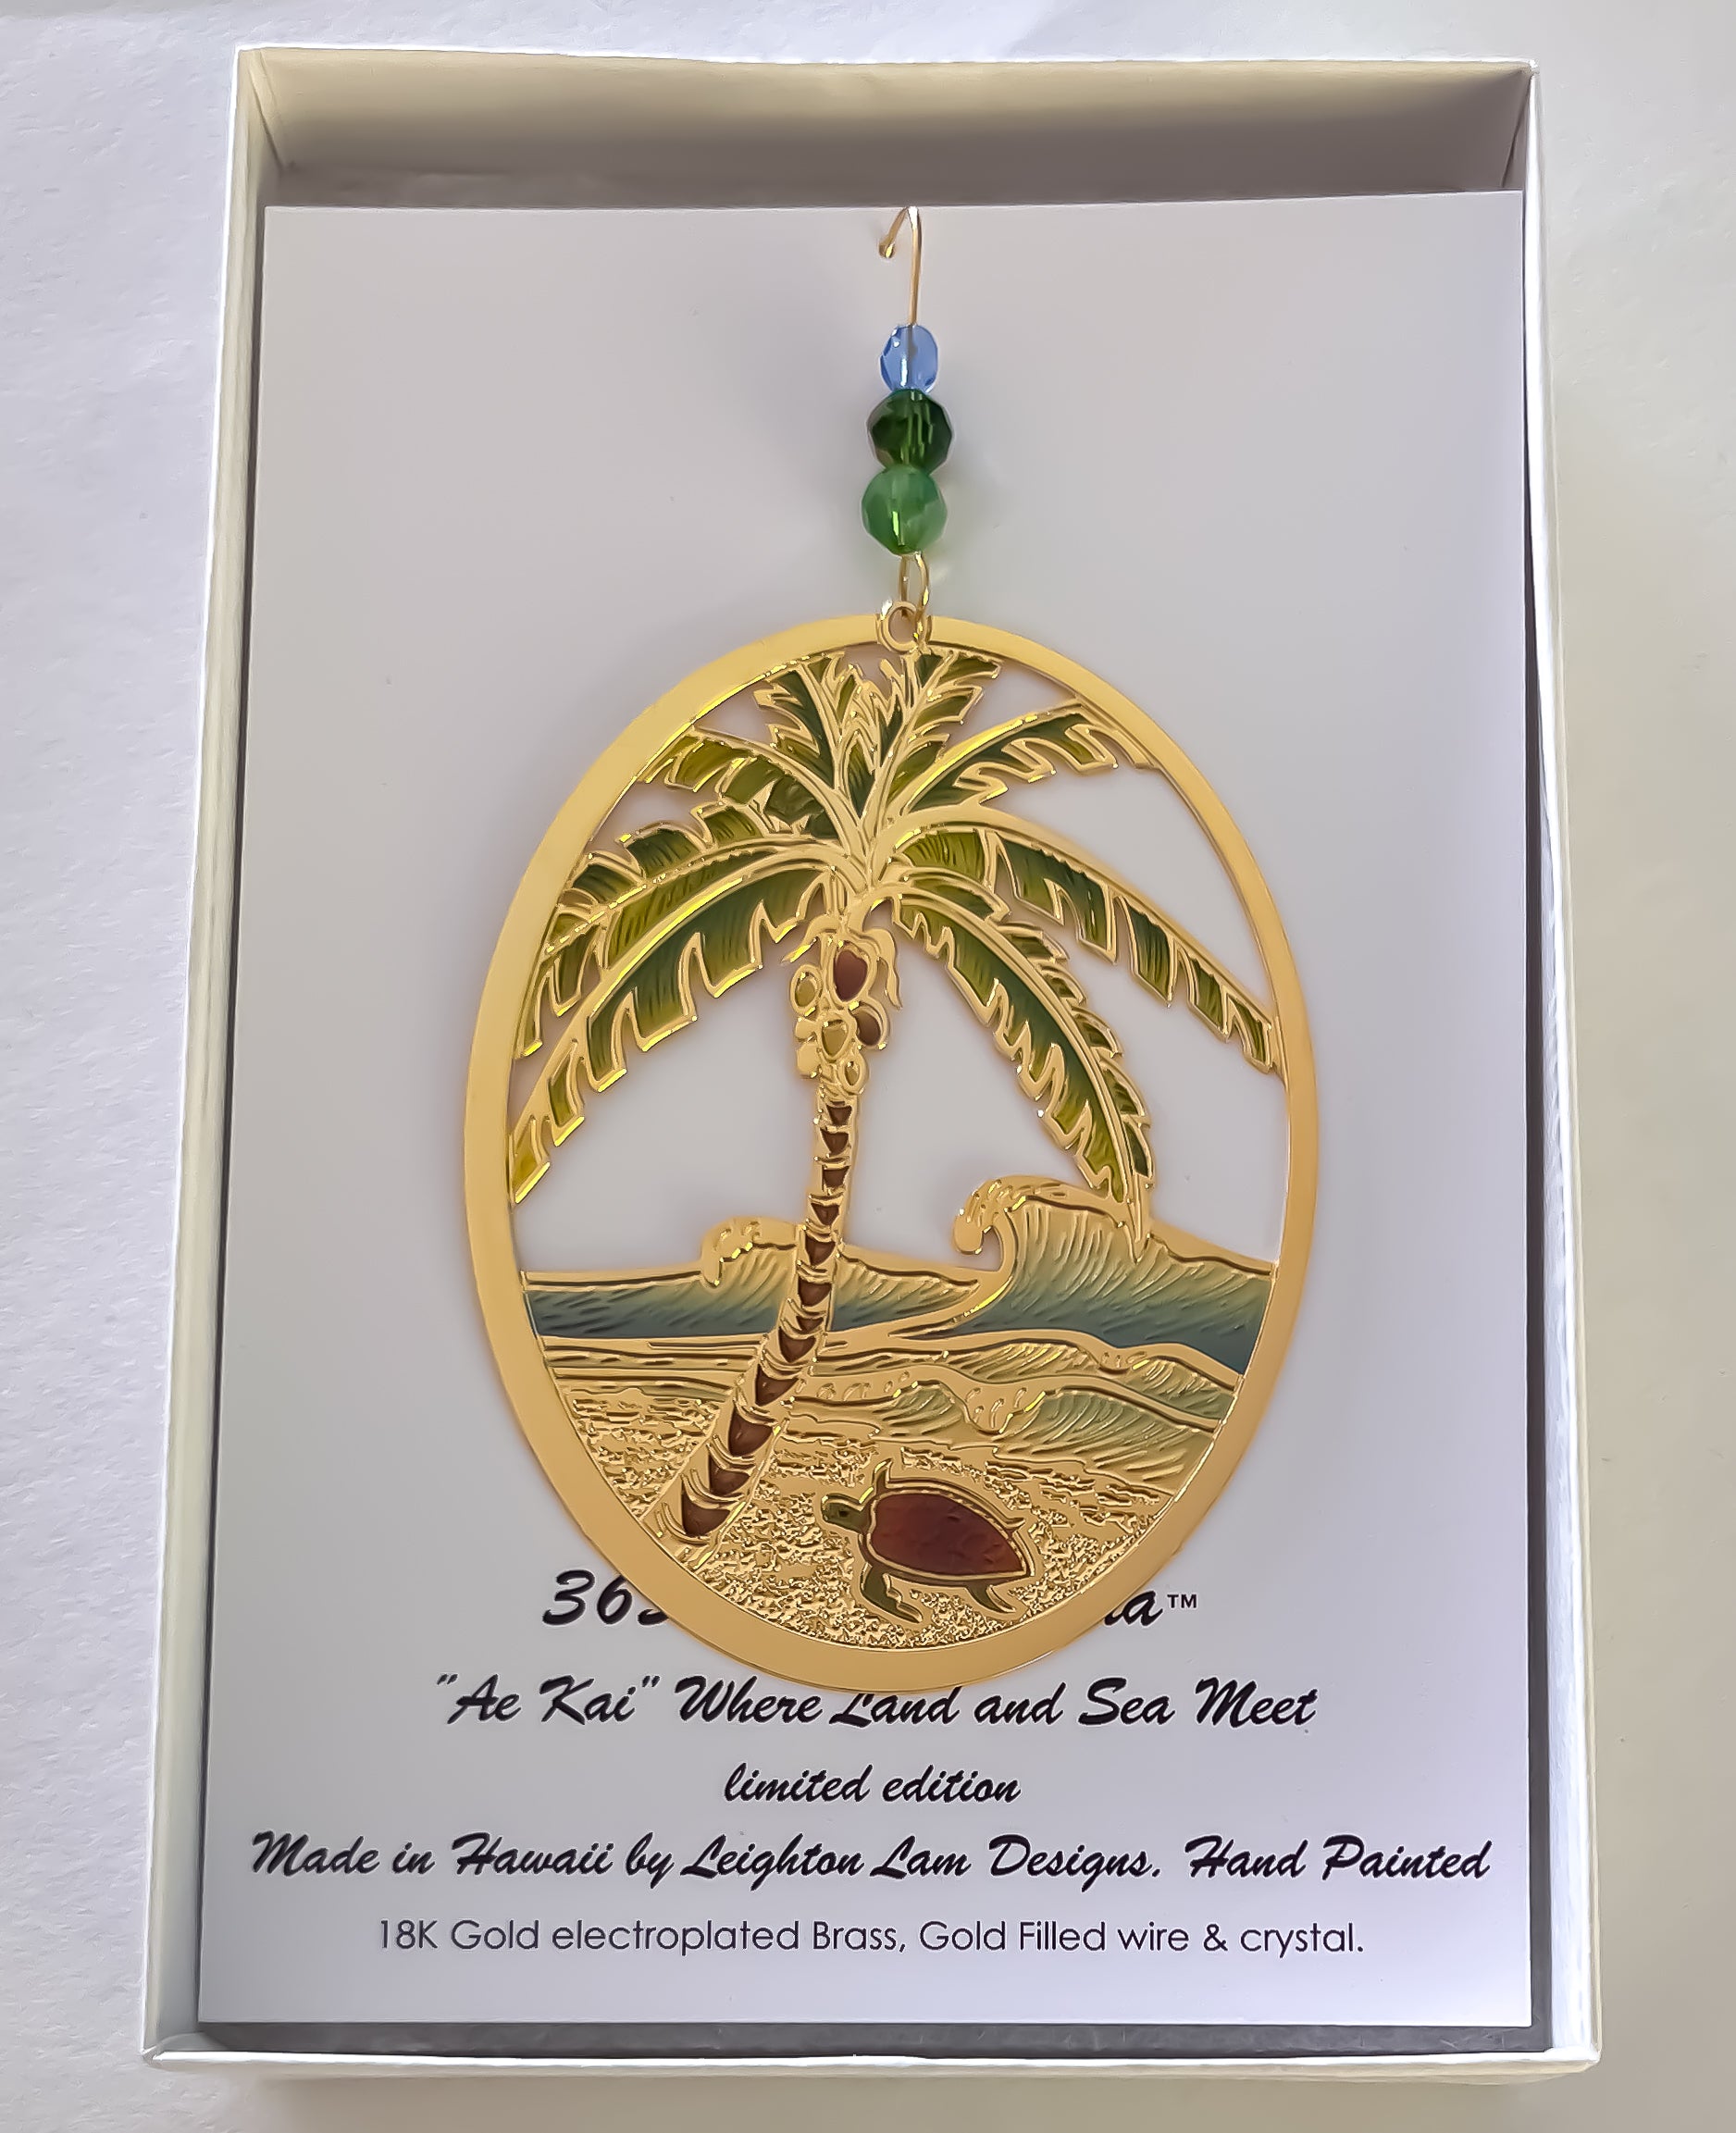 Oval Island Ornament